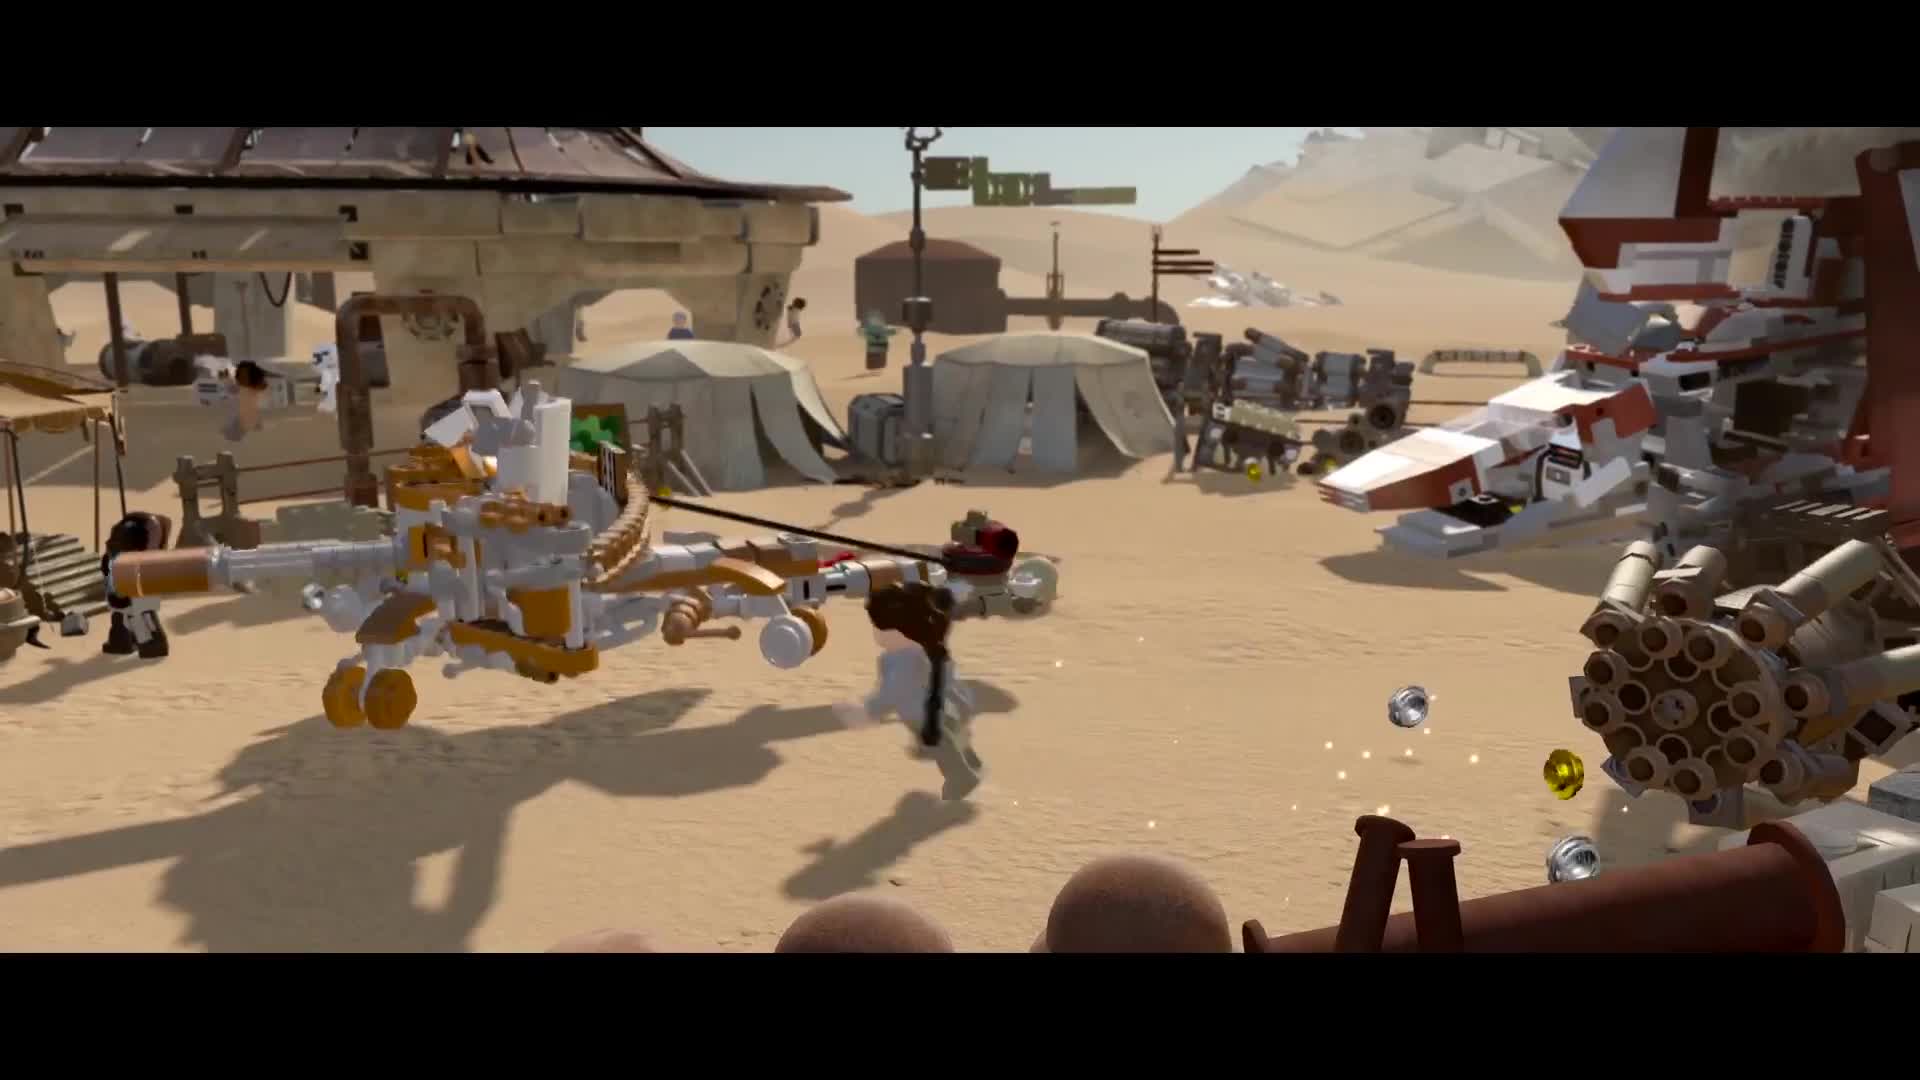 Lego Star Wars The Force Awakens - gameplay trailer